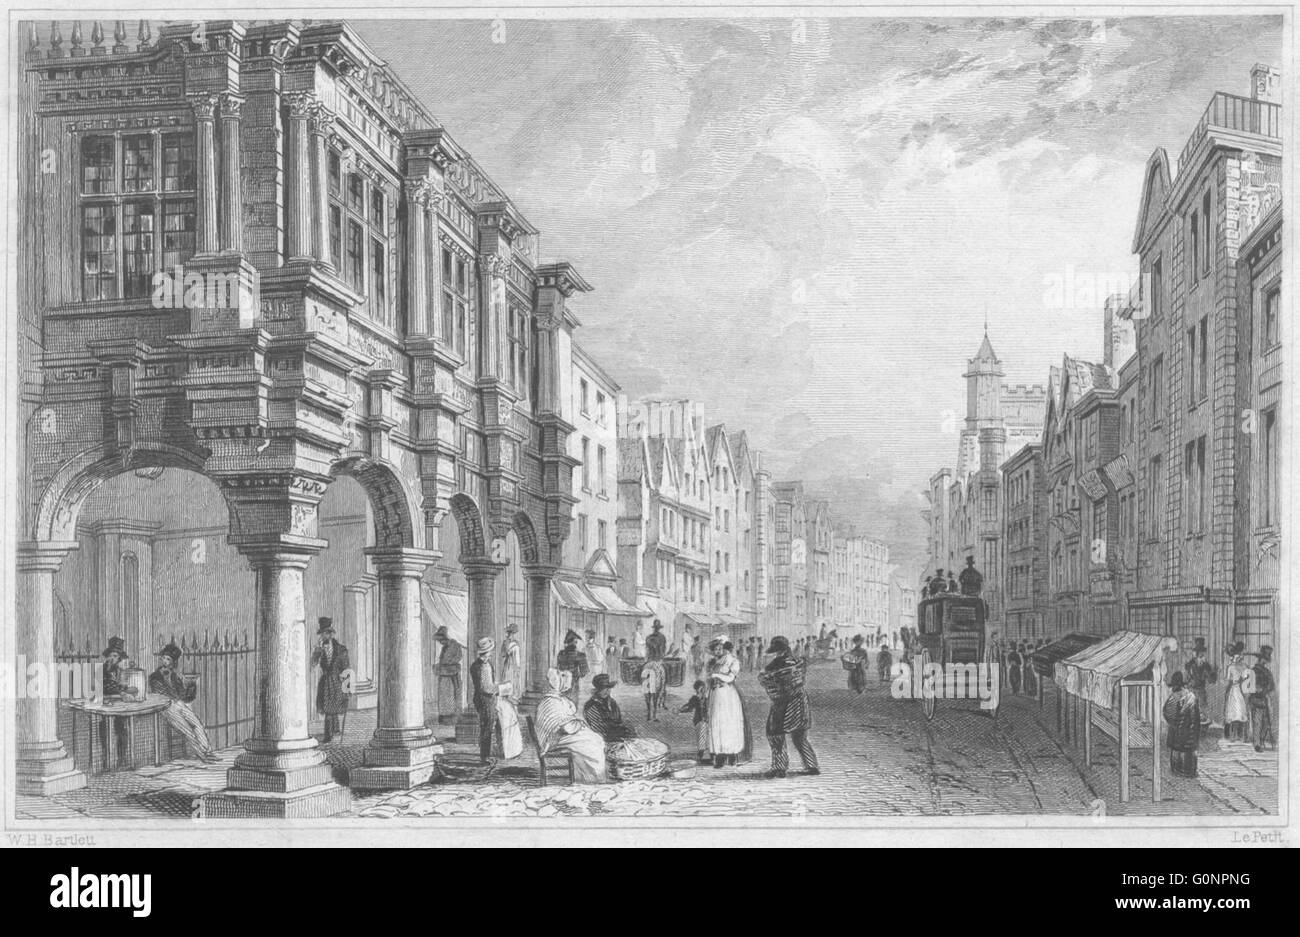 DEVON: Guildhall, Fore Street, Exeter, grabado antiguo 1829 Foto de stock